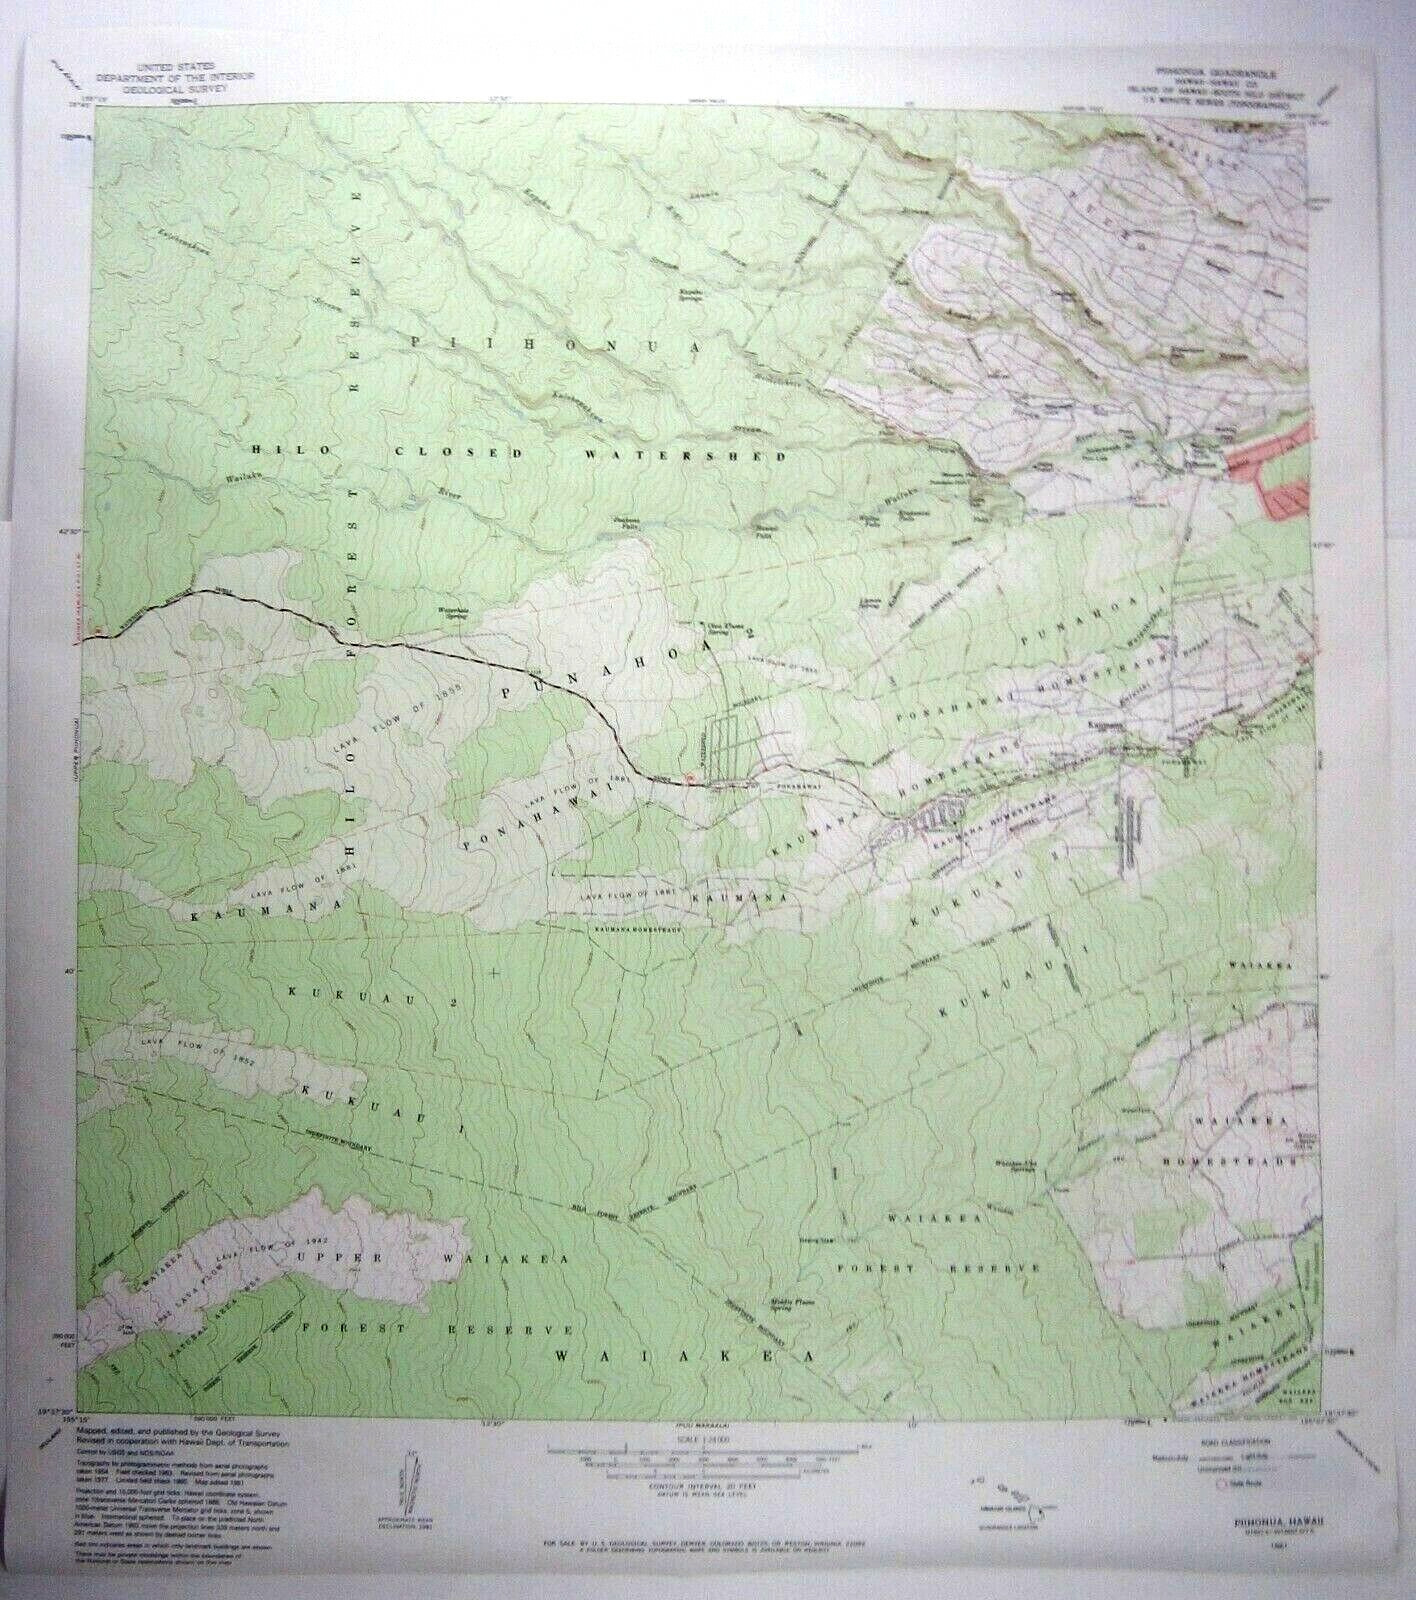 Hilo Hawaii USGS Topographical Map Piihonua Quadrangle 24\